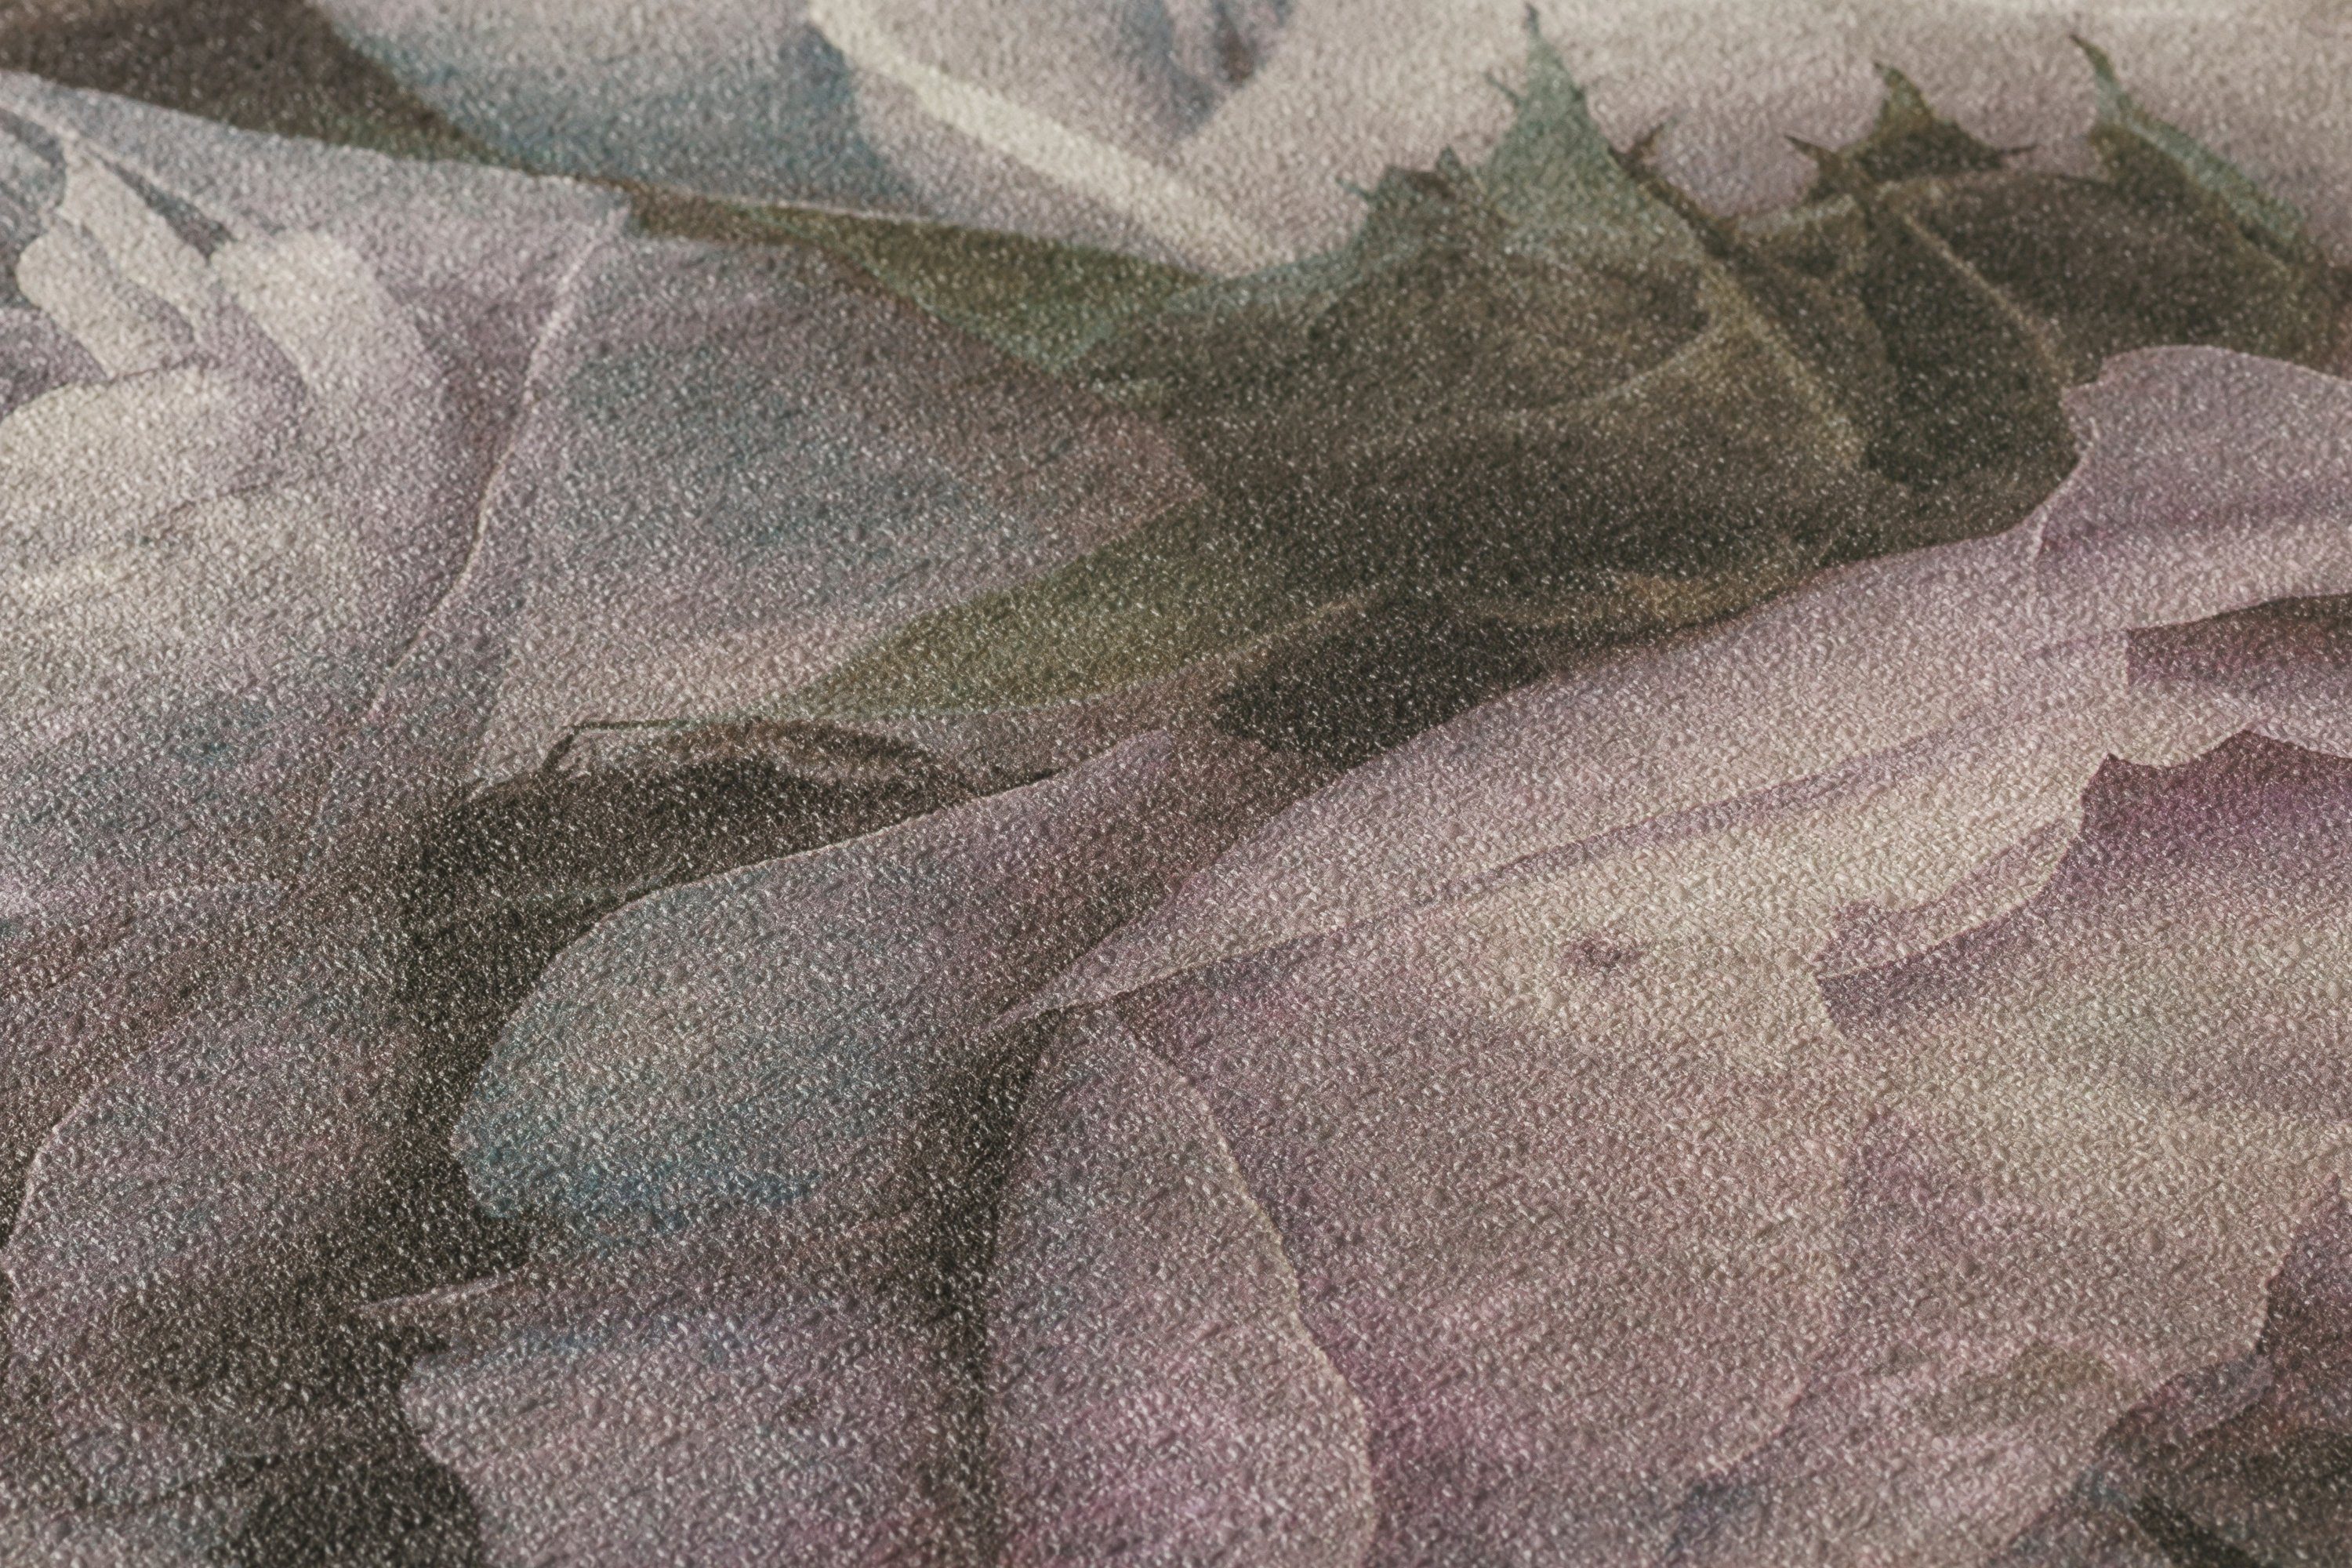 Romantic New Vliestapete Rosen, floral, Tapete walls romantischen Dream Walls lila/grau living Blumen mit